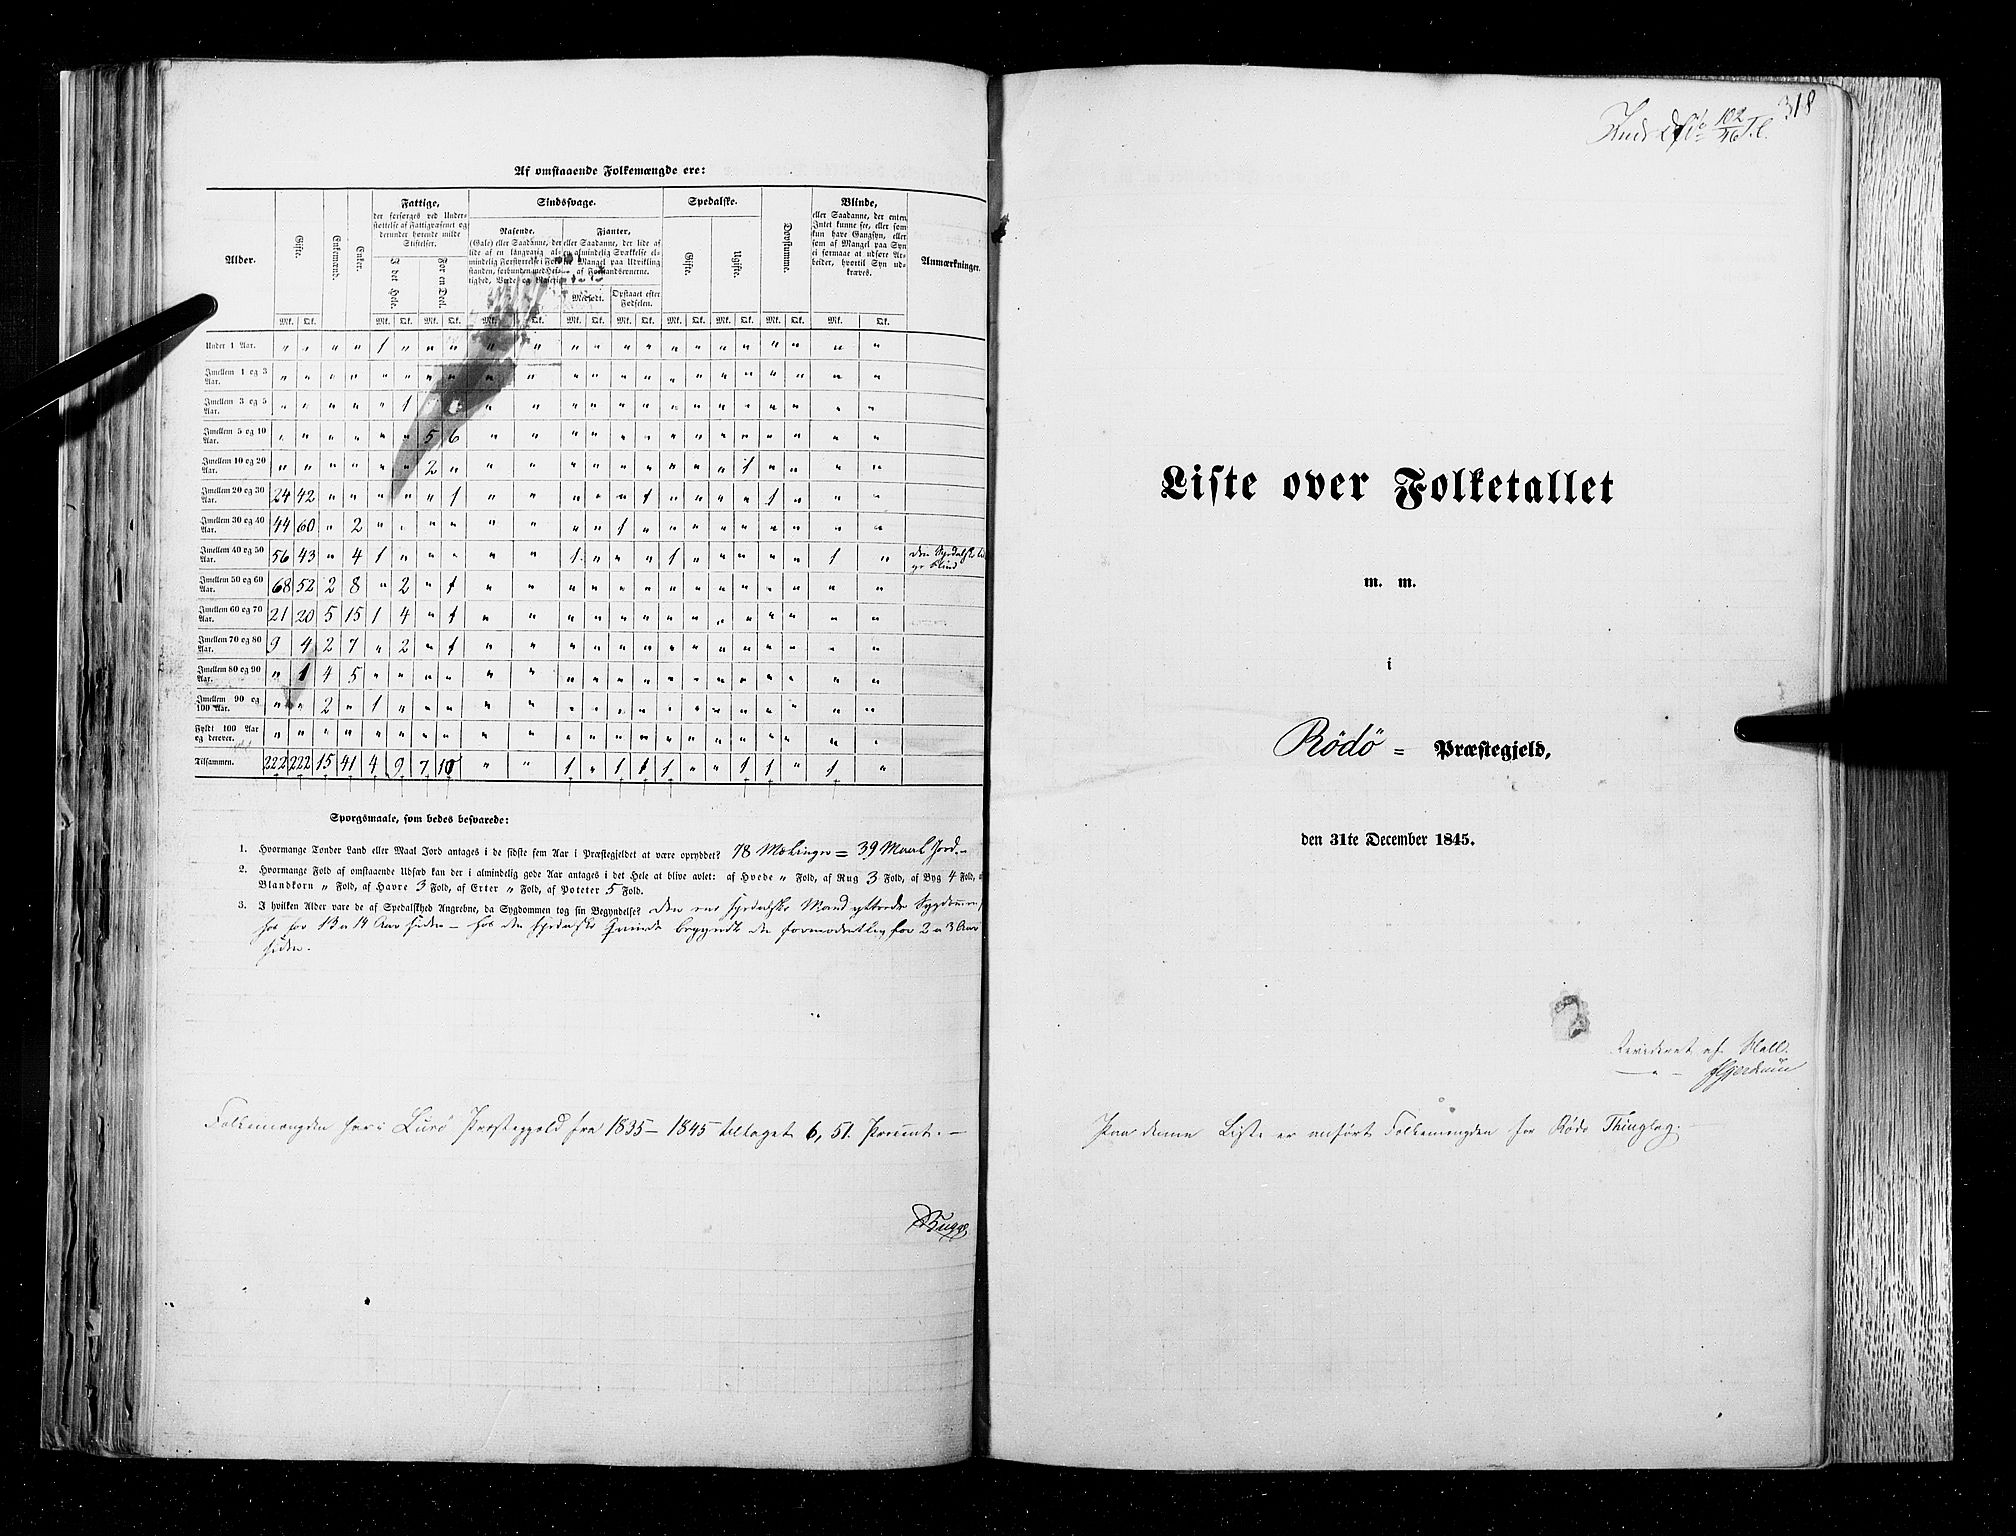 RA, Folketellingen 1845, bind 9B: Nordland amt, 1845, s. 318